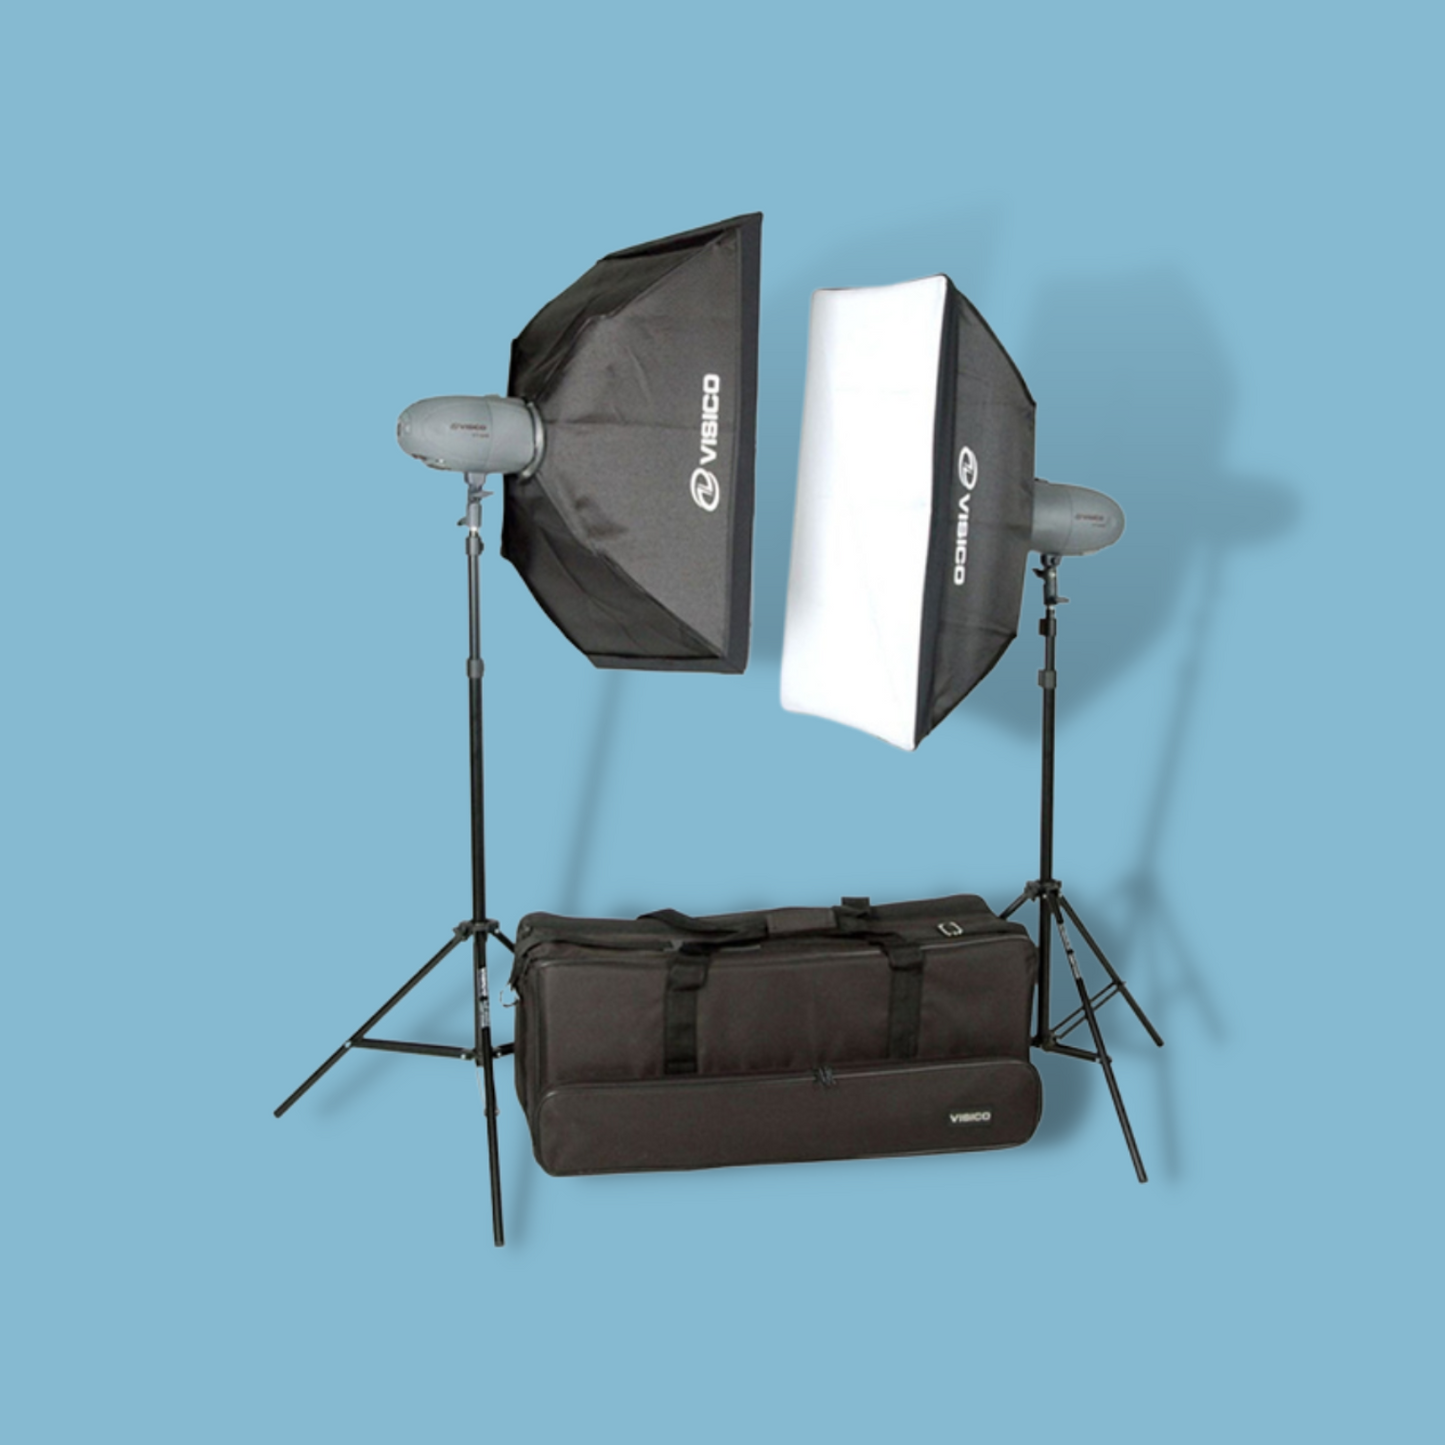 Visico 300w Light Kit (2 head kit)